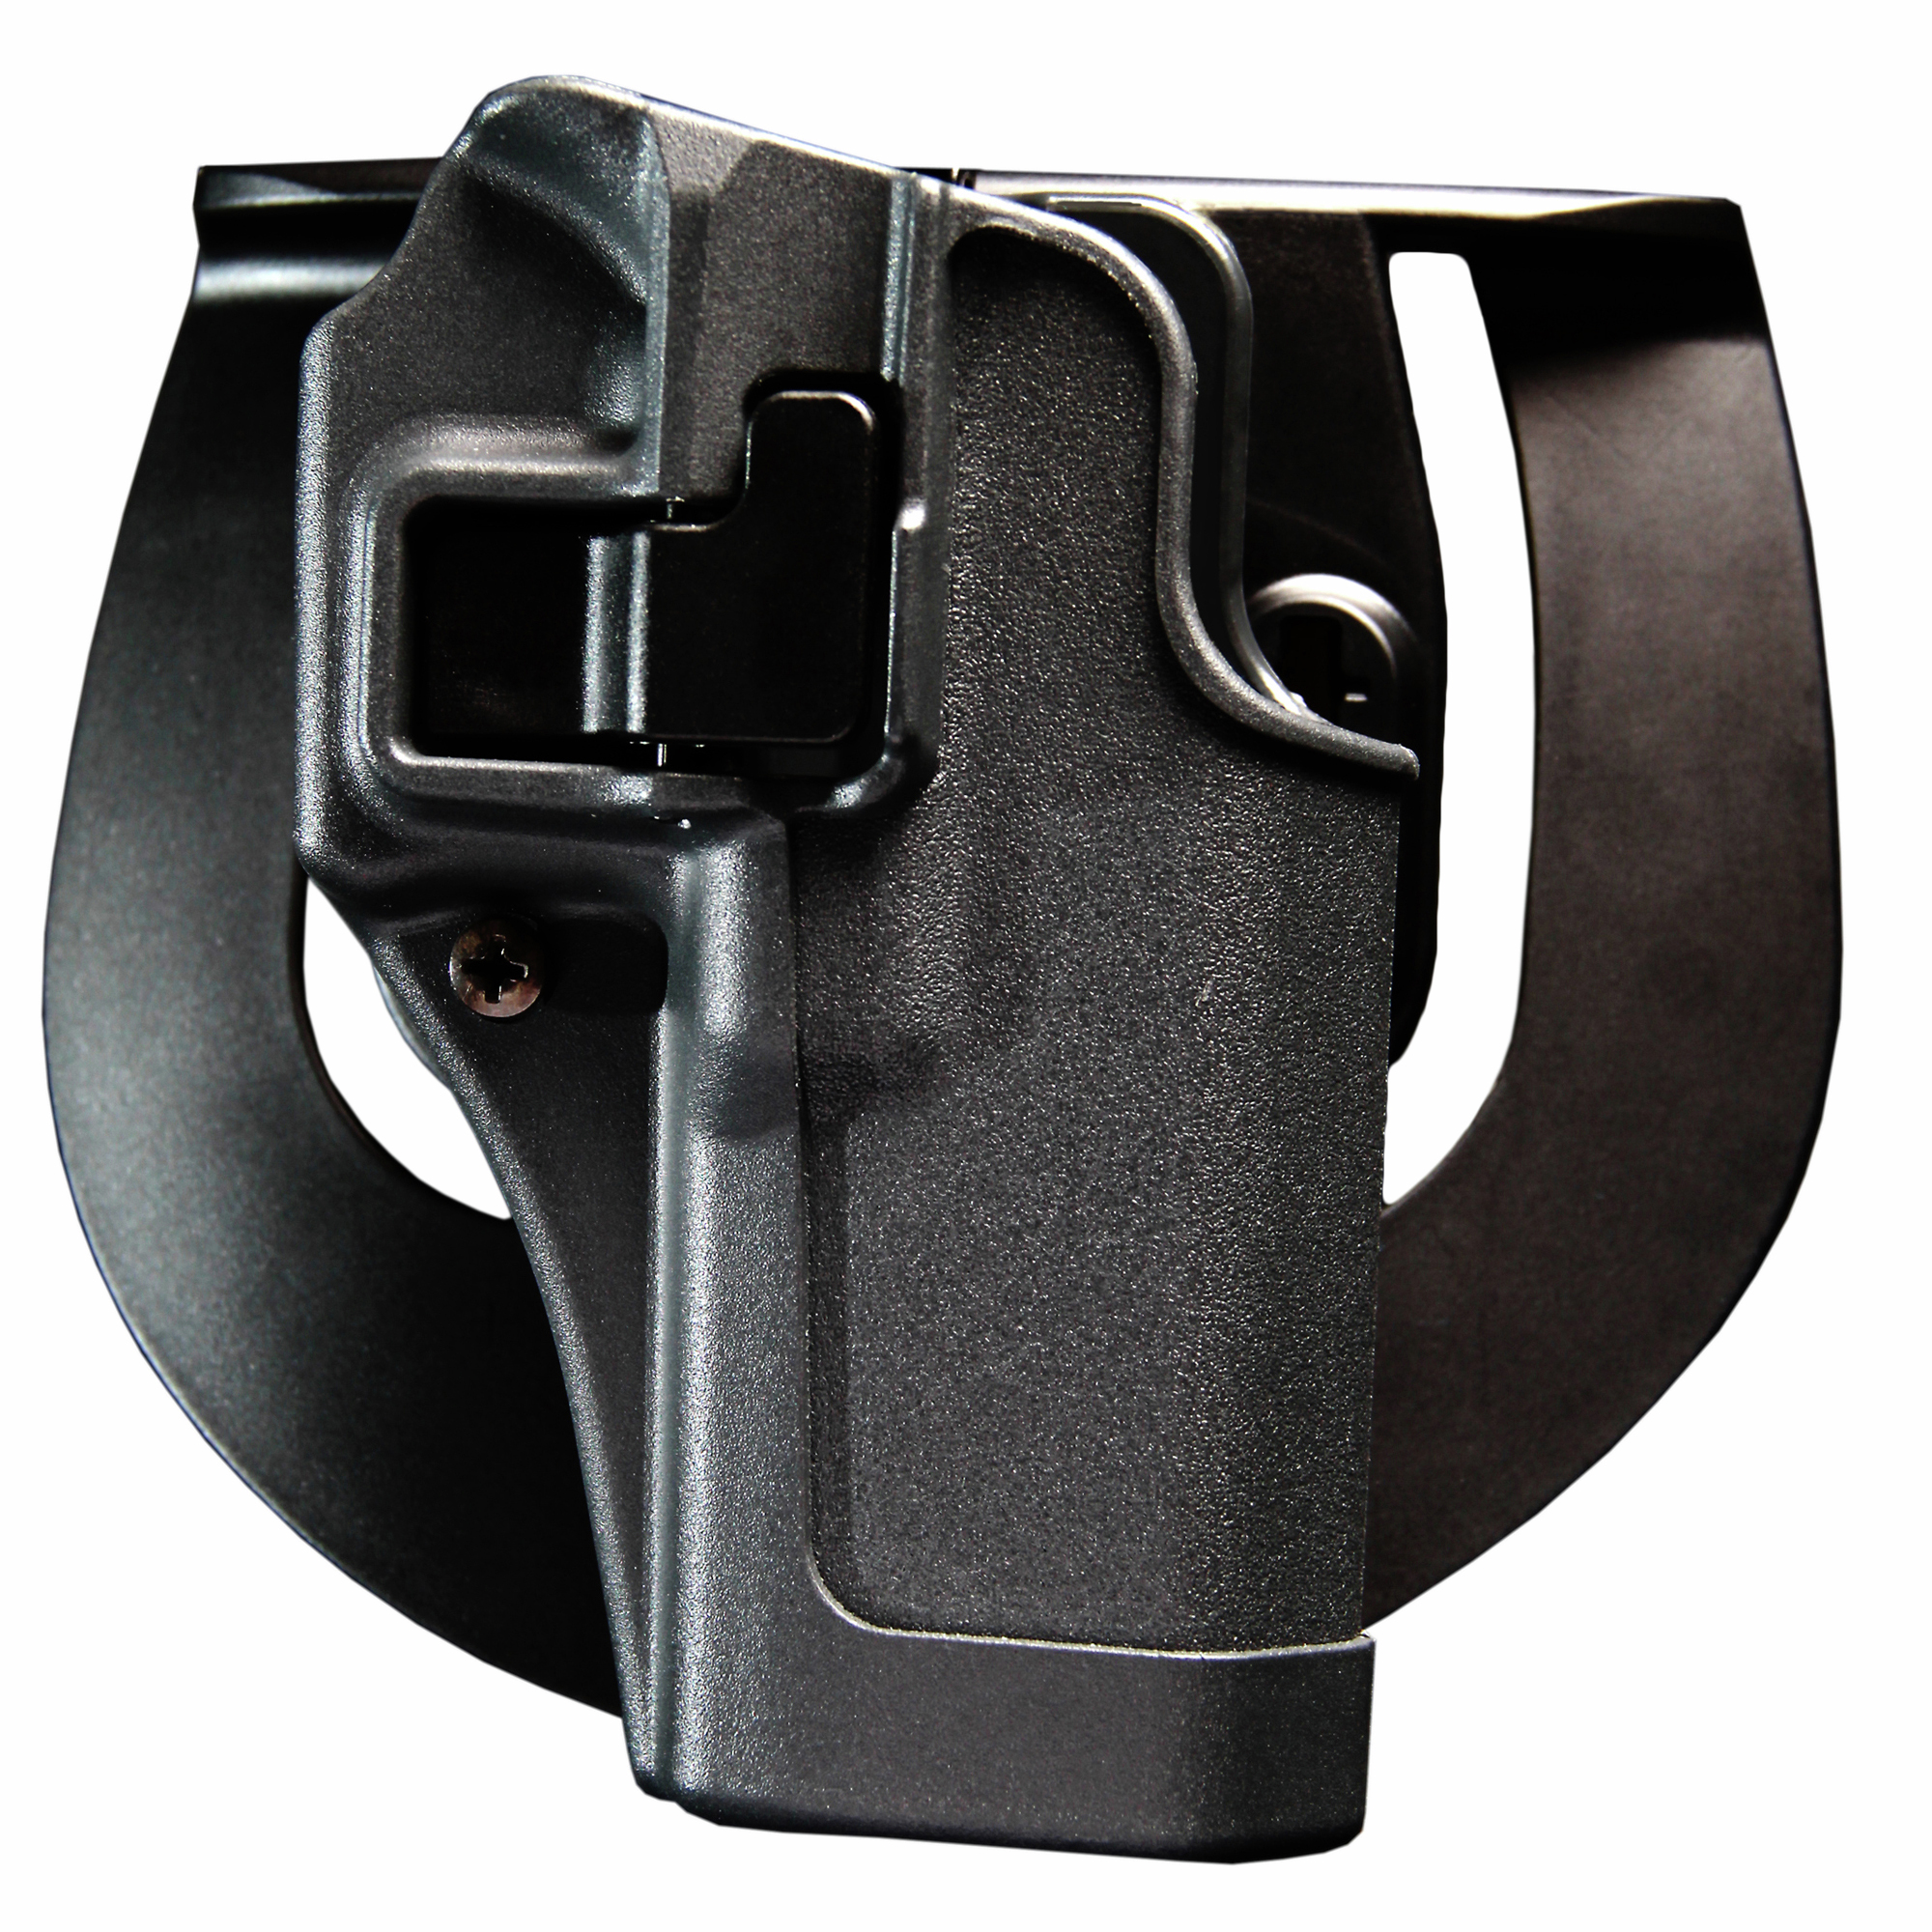 Details about   BlackHawk SERPA CQC Sportster Paddle Holster Glock 26/27/33